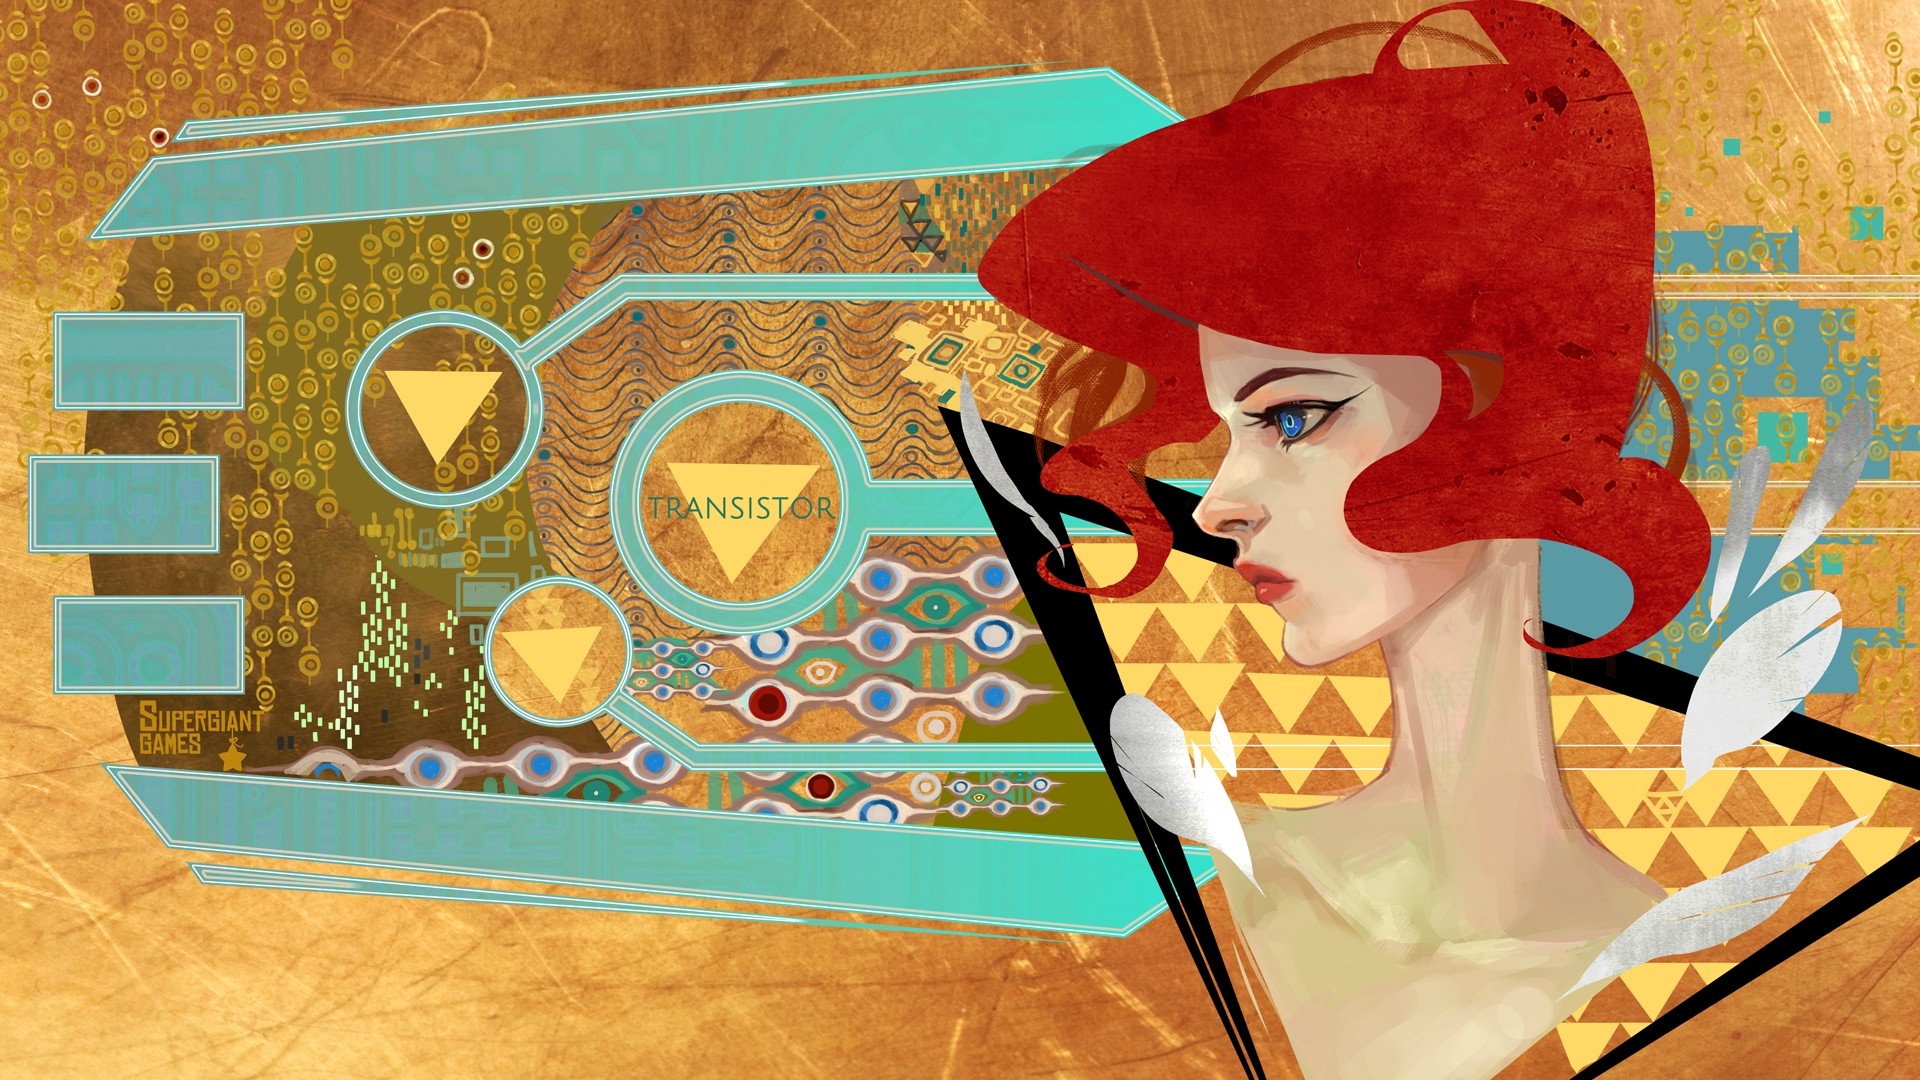 redhead, Transistor, Video games, Supergiant Games, Artwork, Red Wallpaper